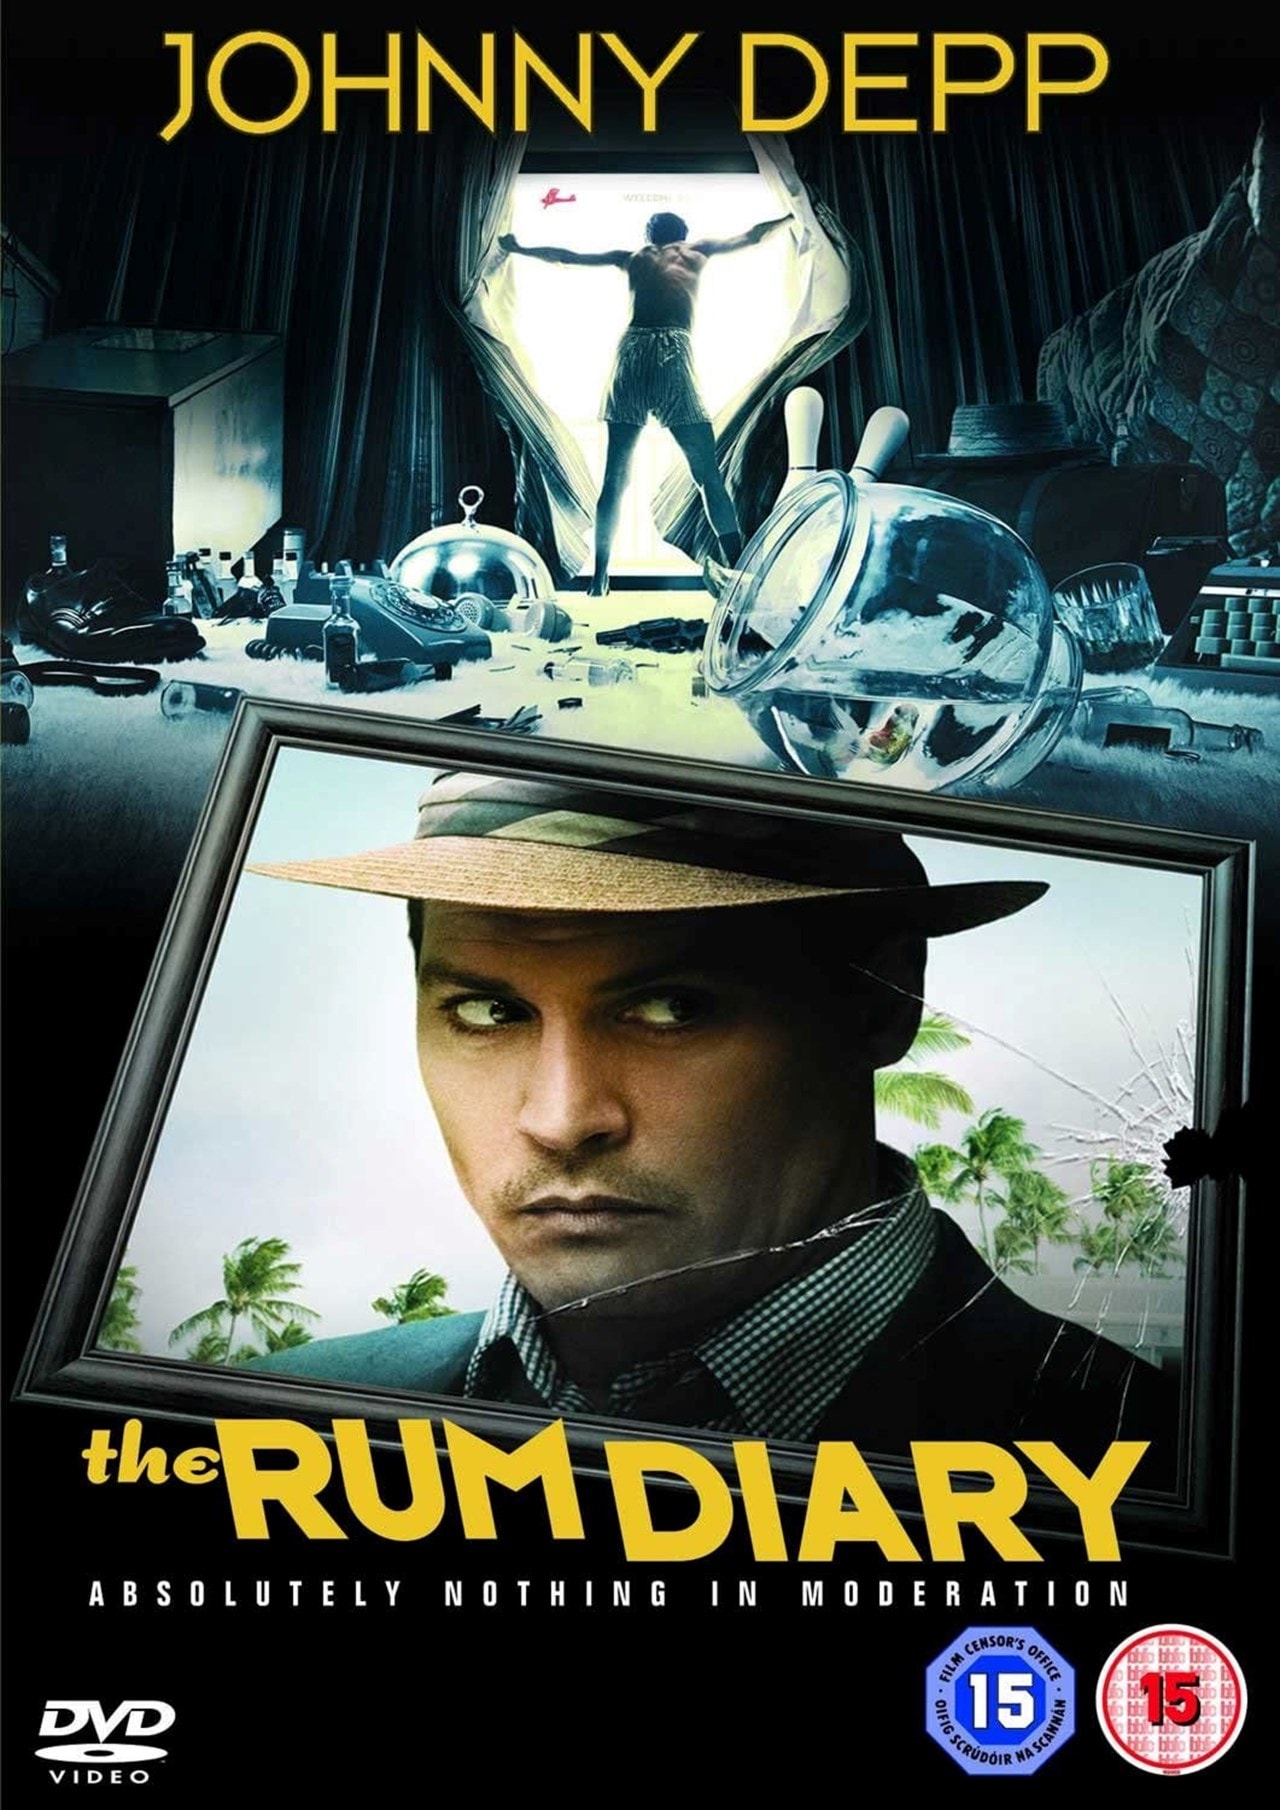 the rum diary author